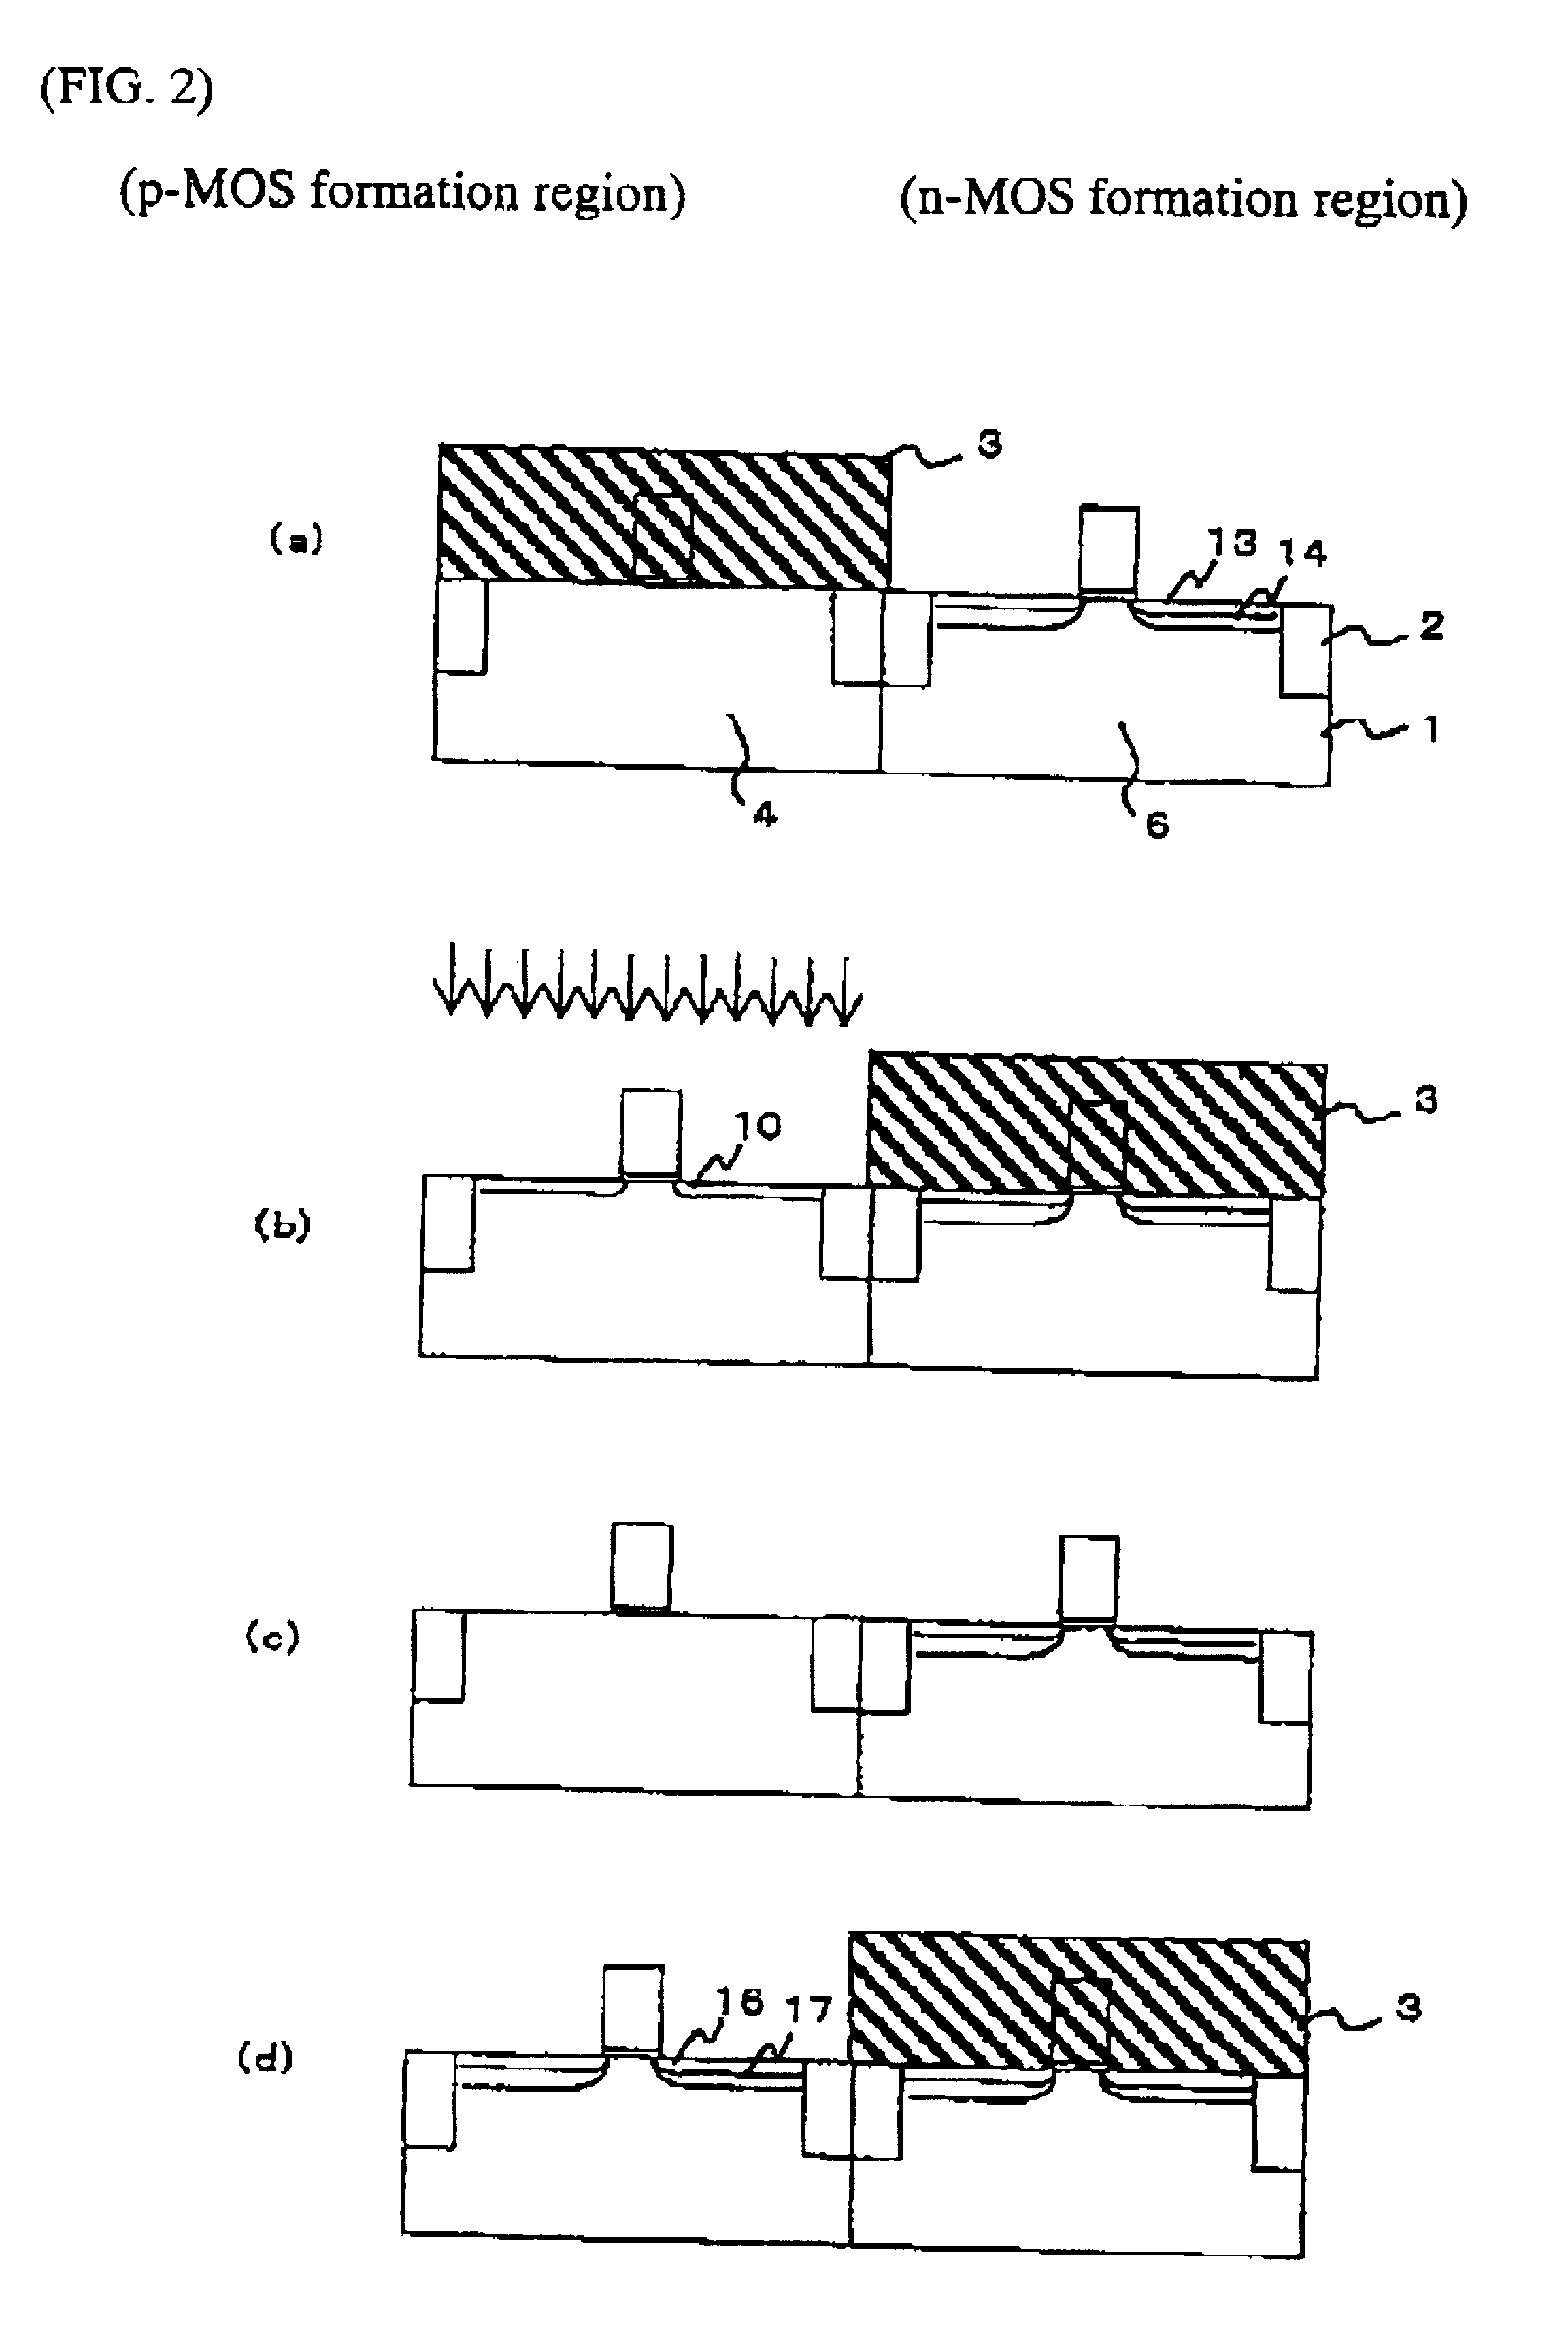 Method of forming MOS transistor